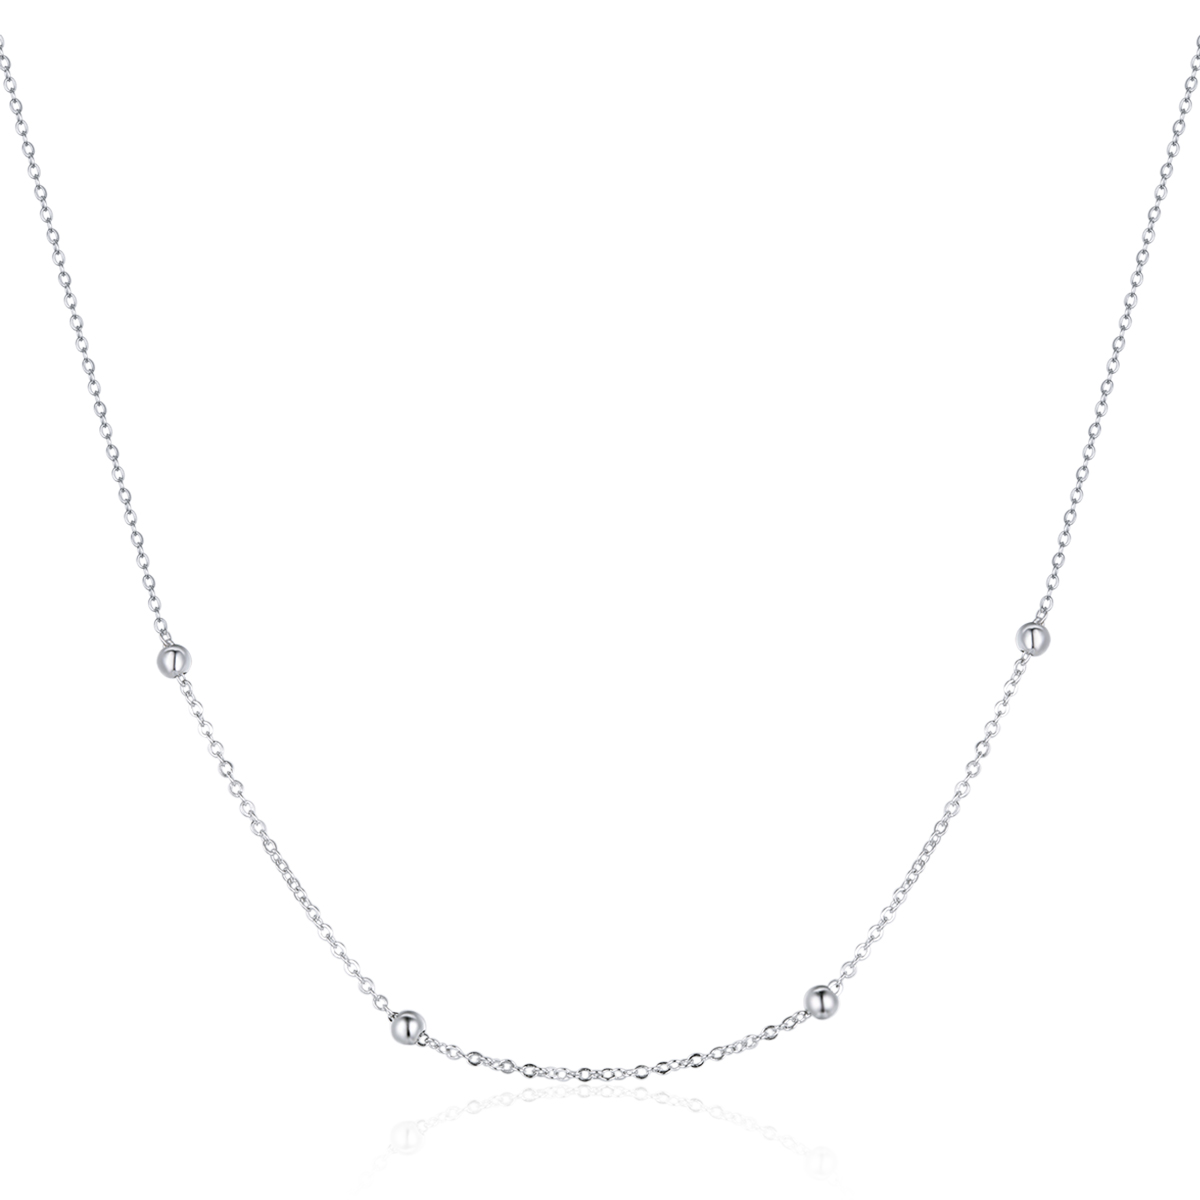 pandora style simple bead chain necklace bsn224